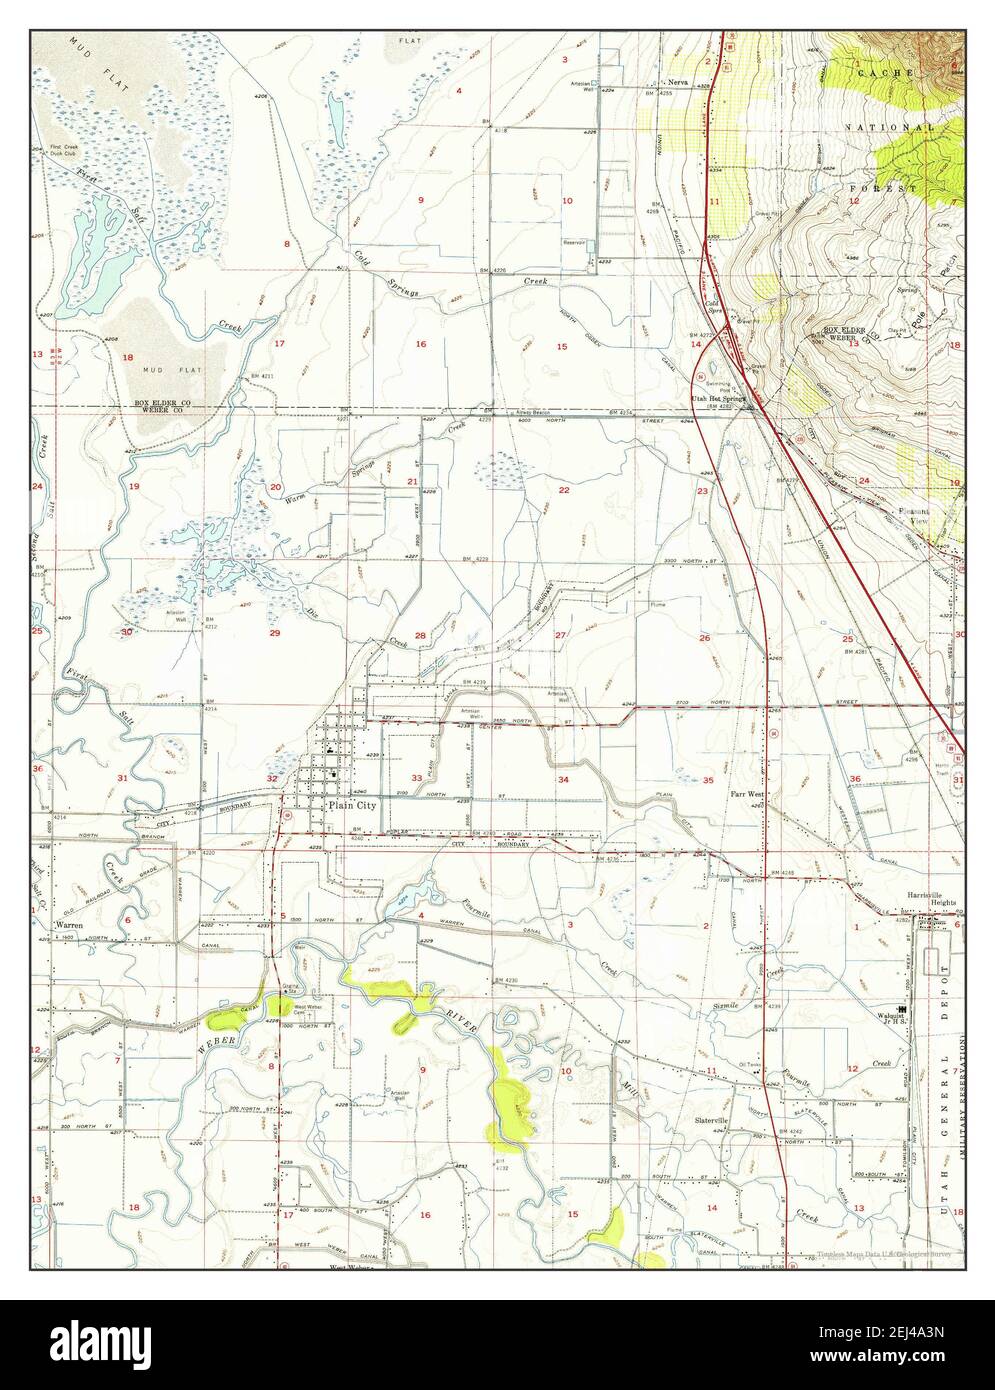 Plain City, Utah, map 1955, 124000, United States of America by